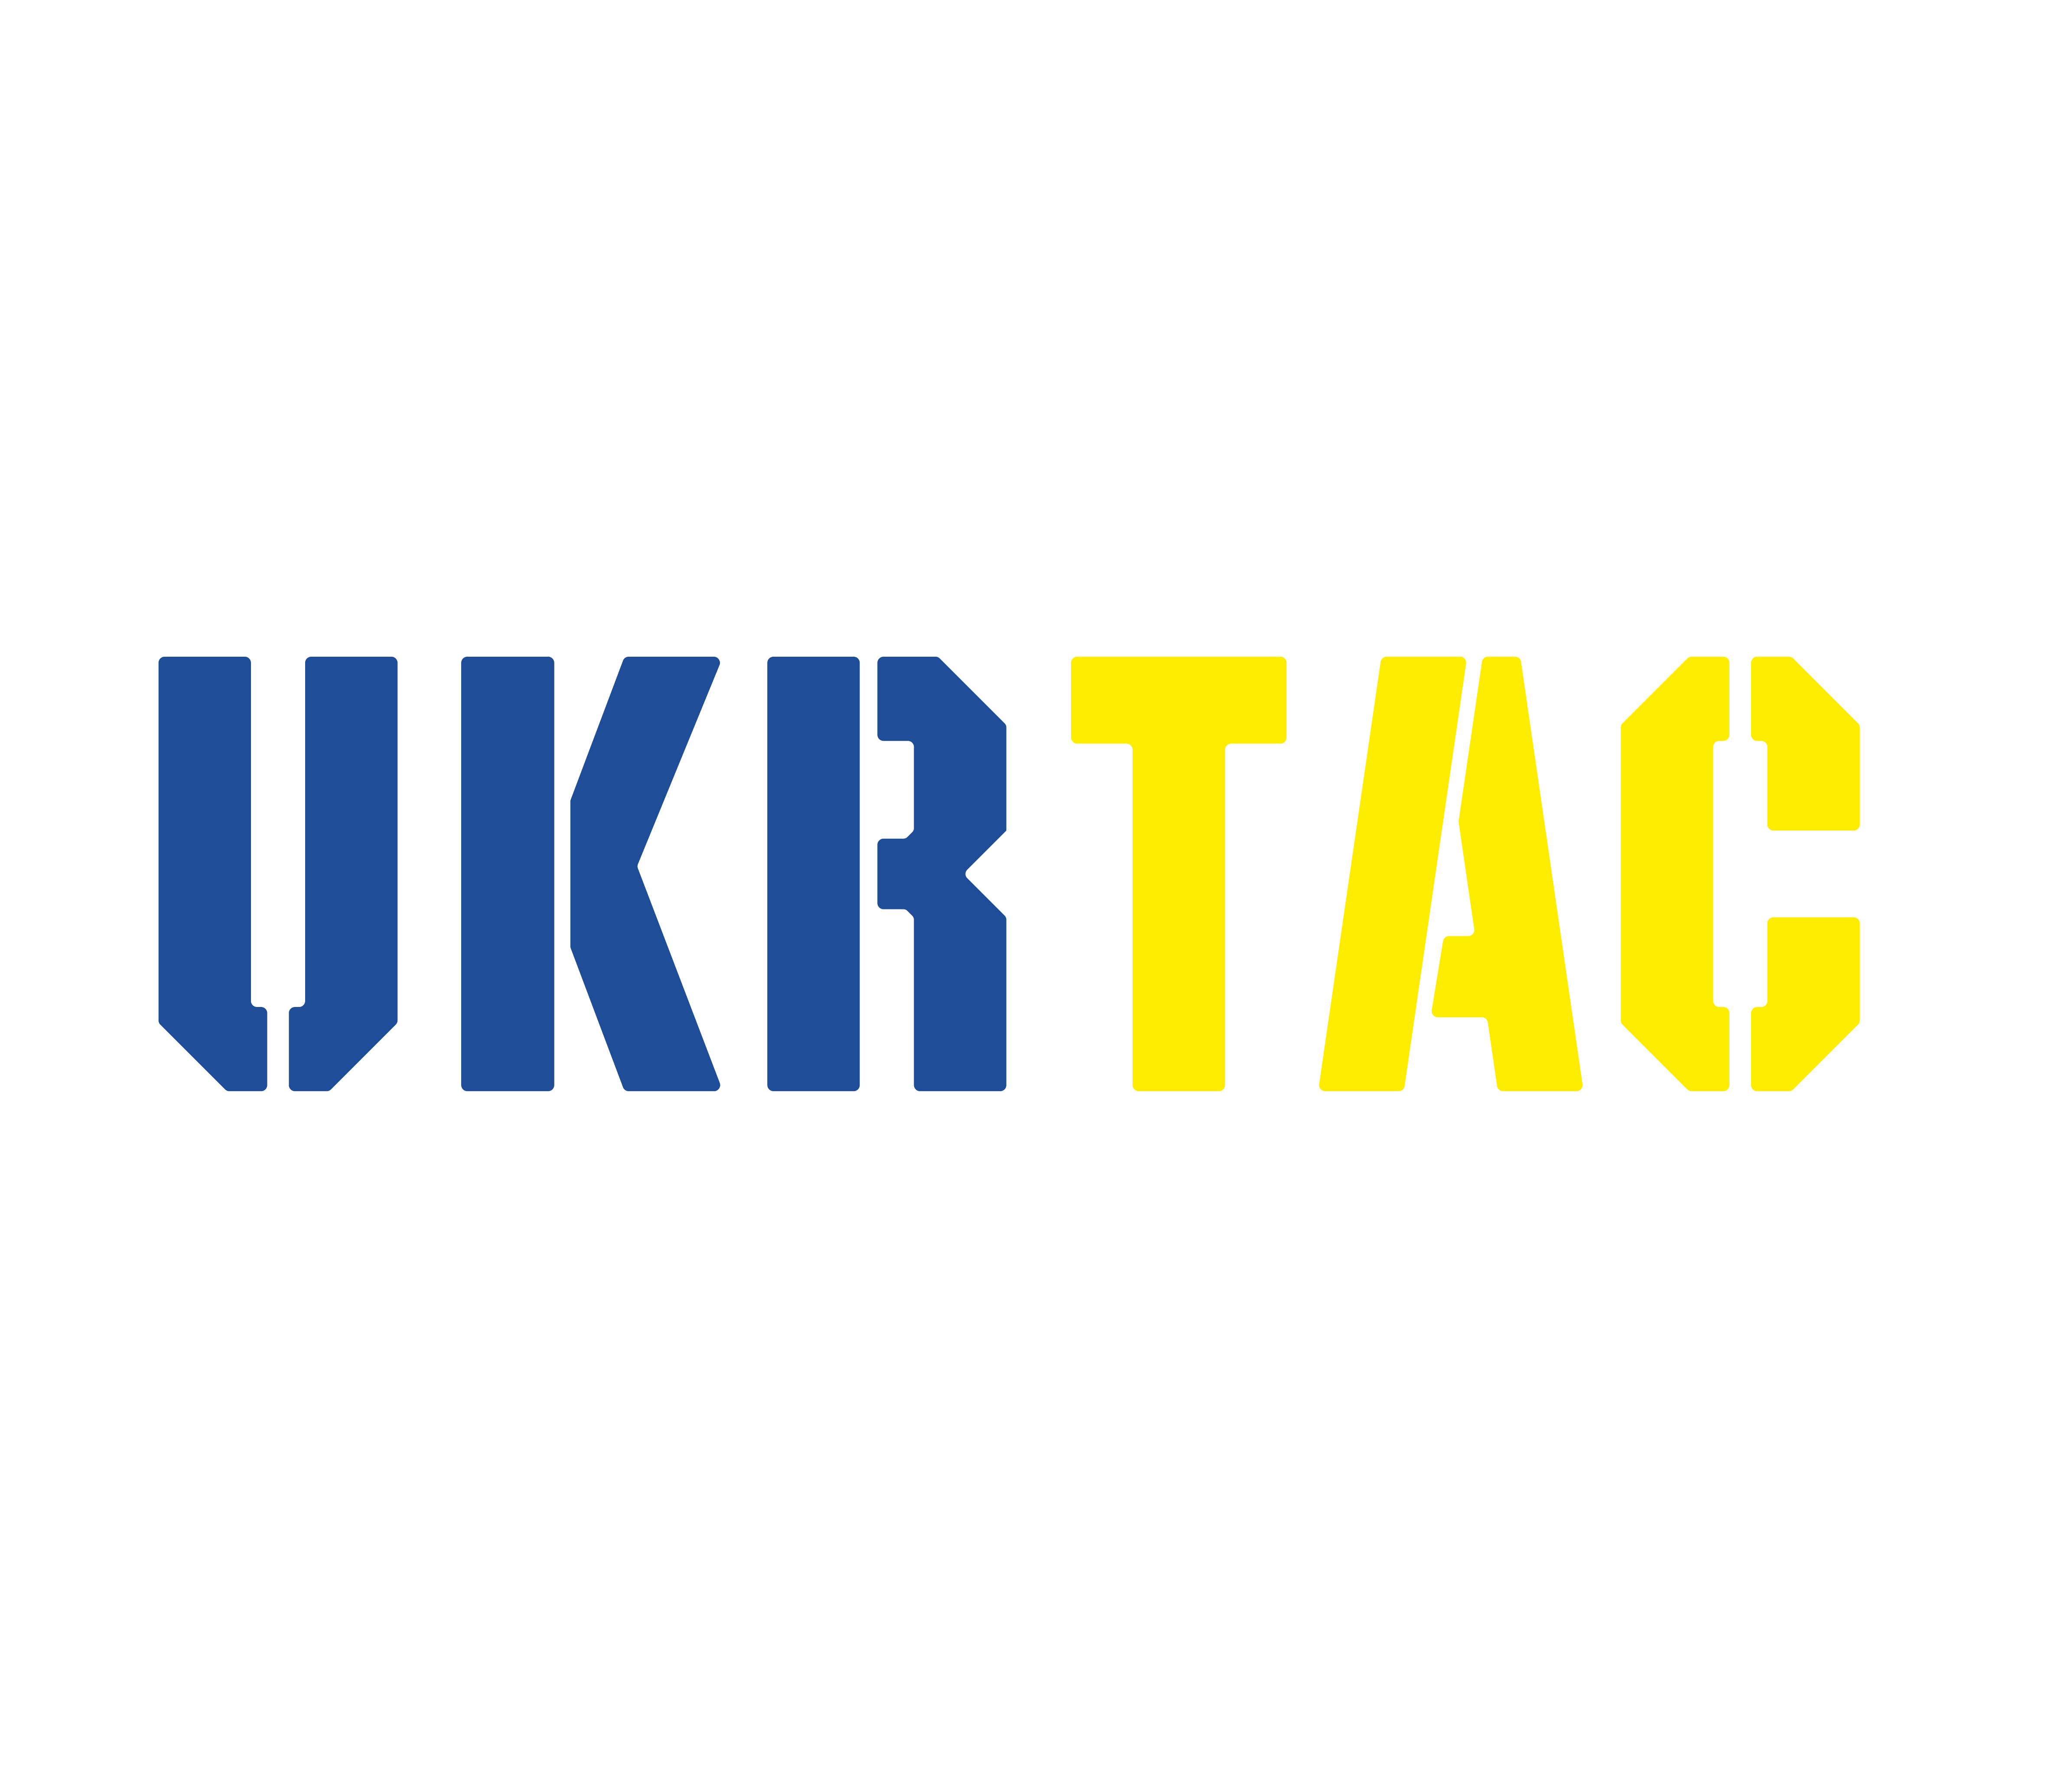 Ukrainian manufacturer of bulletproof vests 